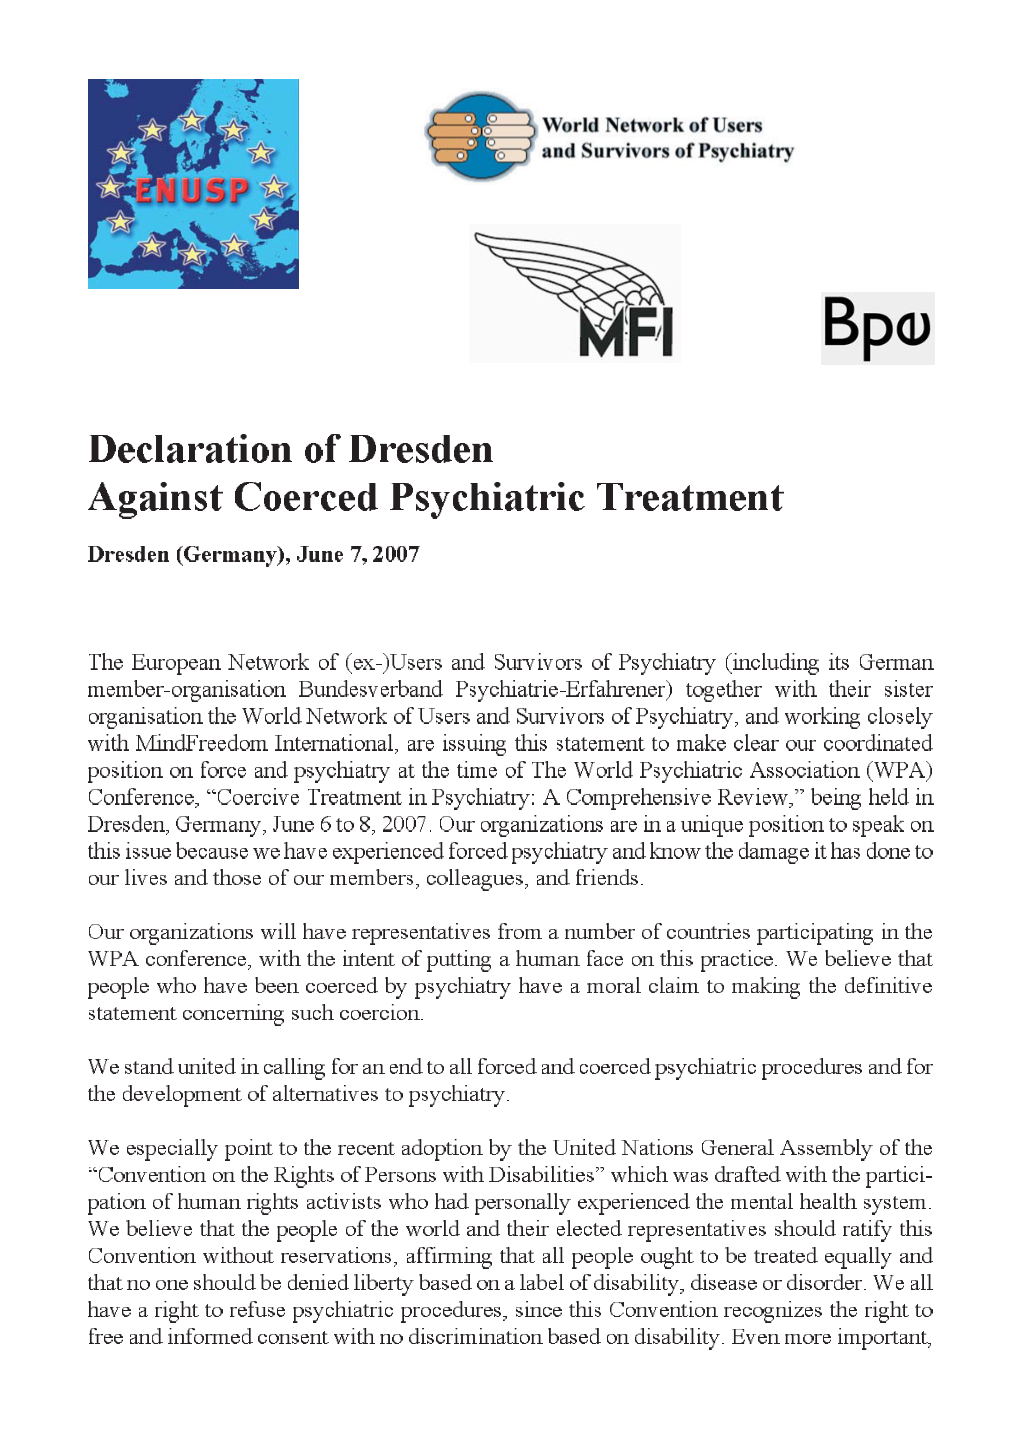 Declaration of Dresden Against Coerced Psychiatric Treatment